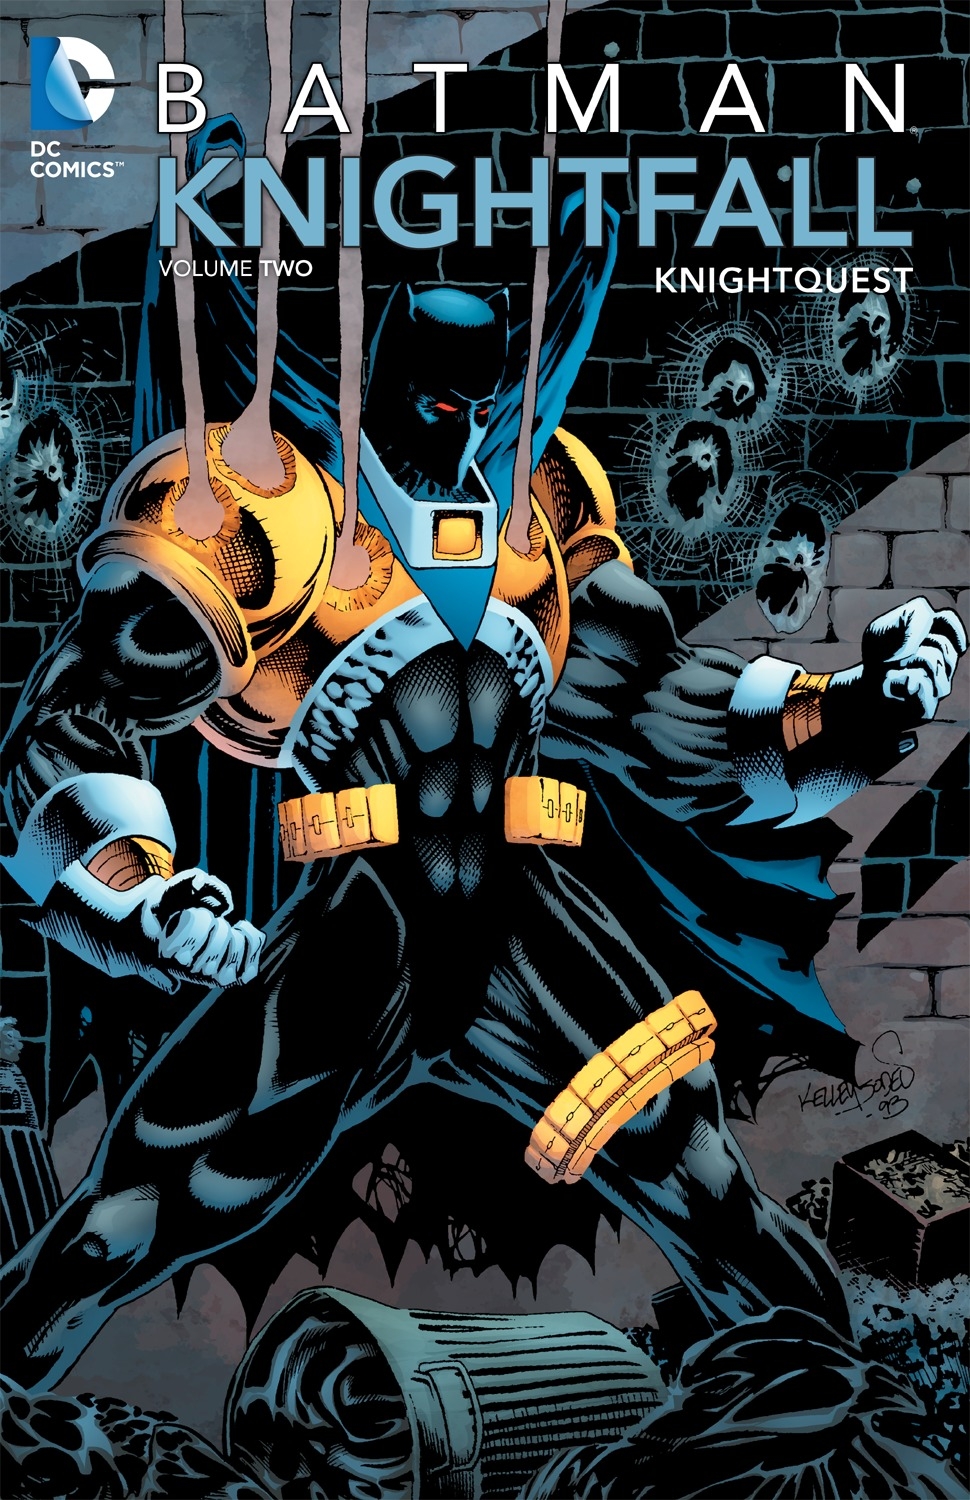 Batman: Knightfall Vol. 2: Knightquest by DC Comics - Penguin Books  Australia